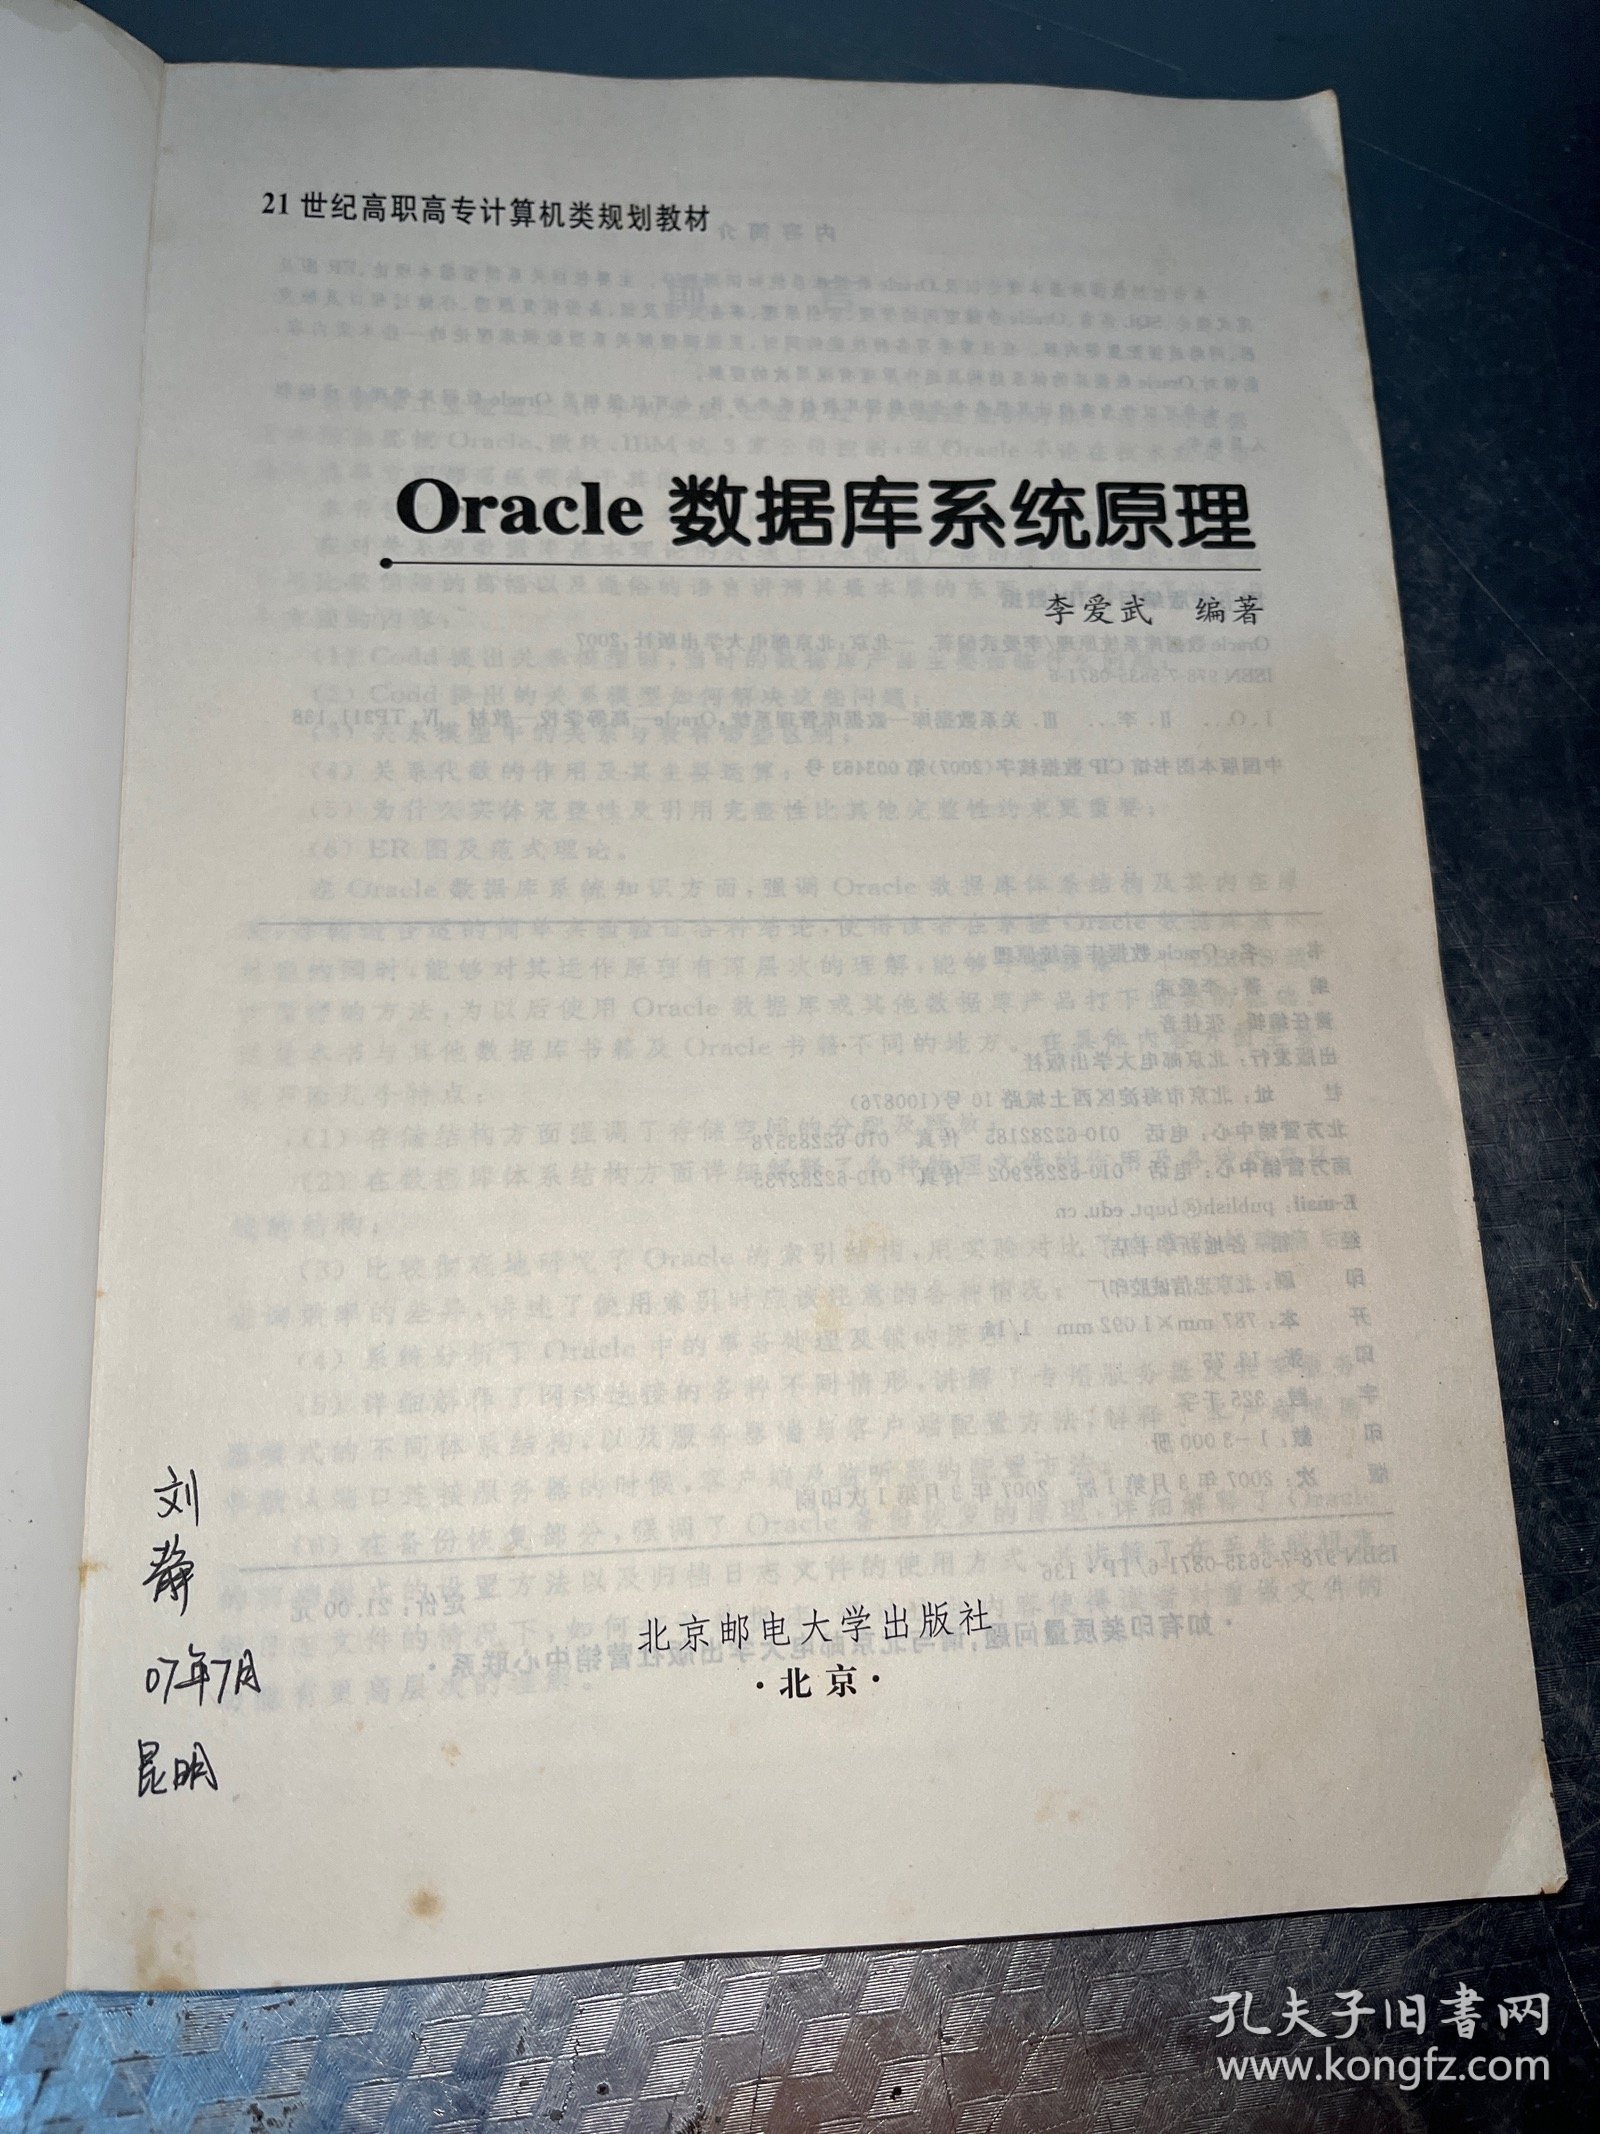 Oracle数据库系统原理